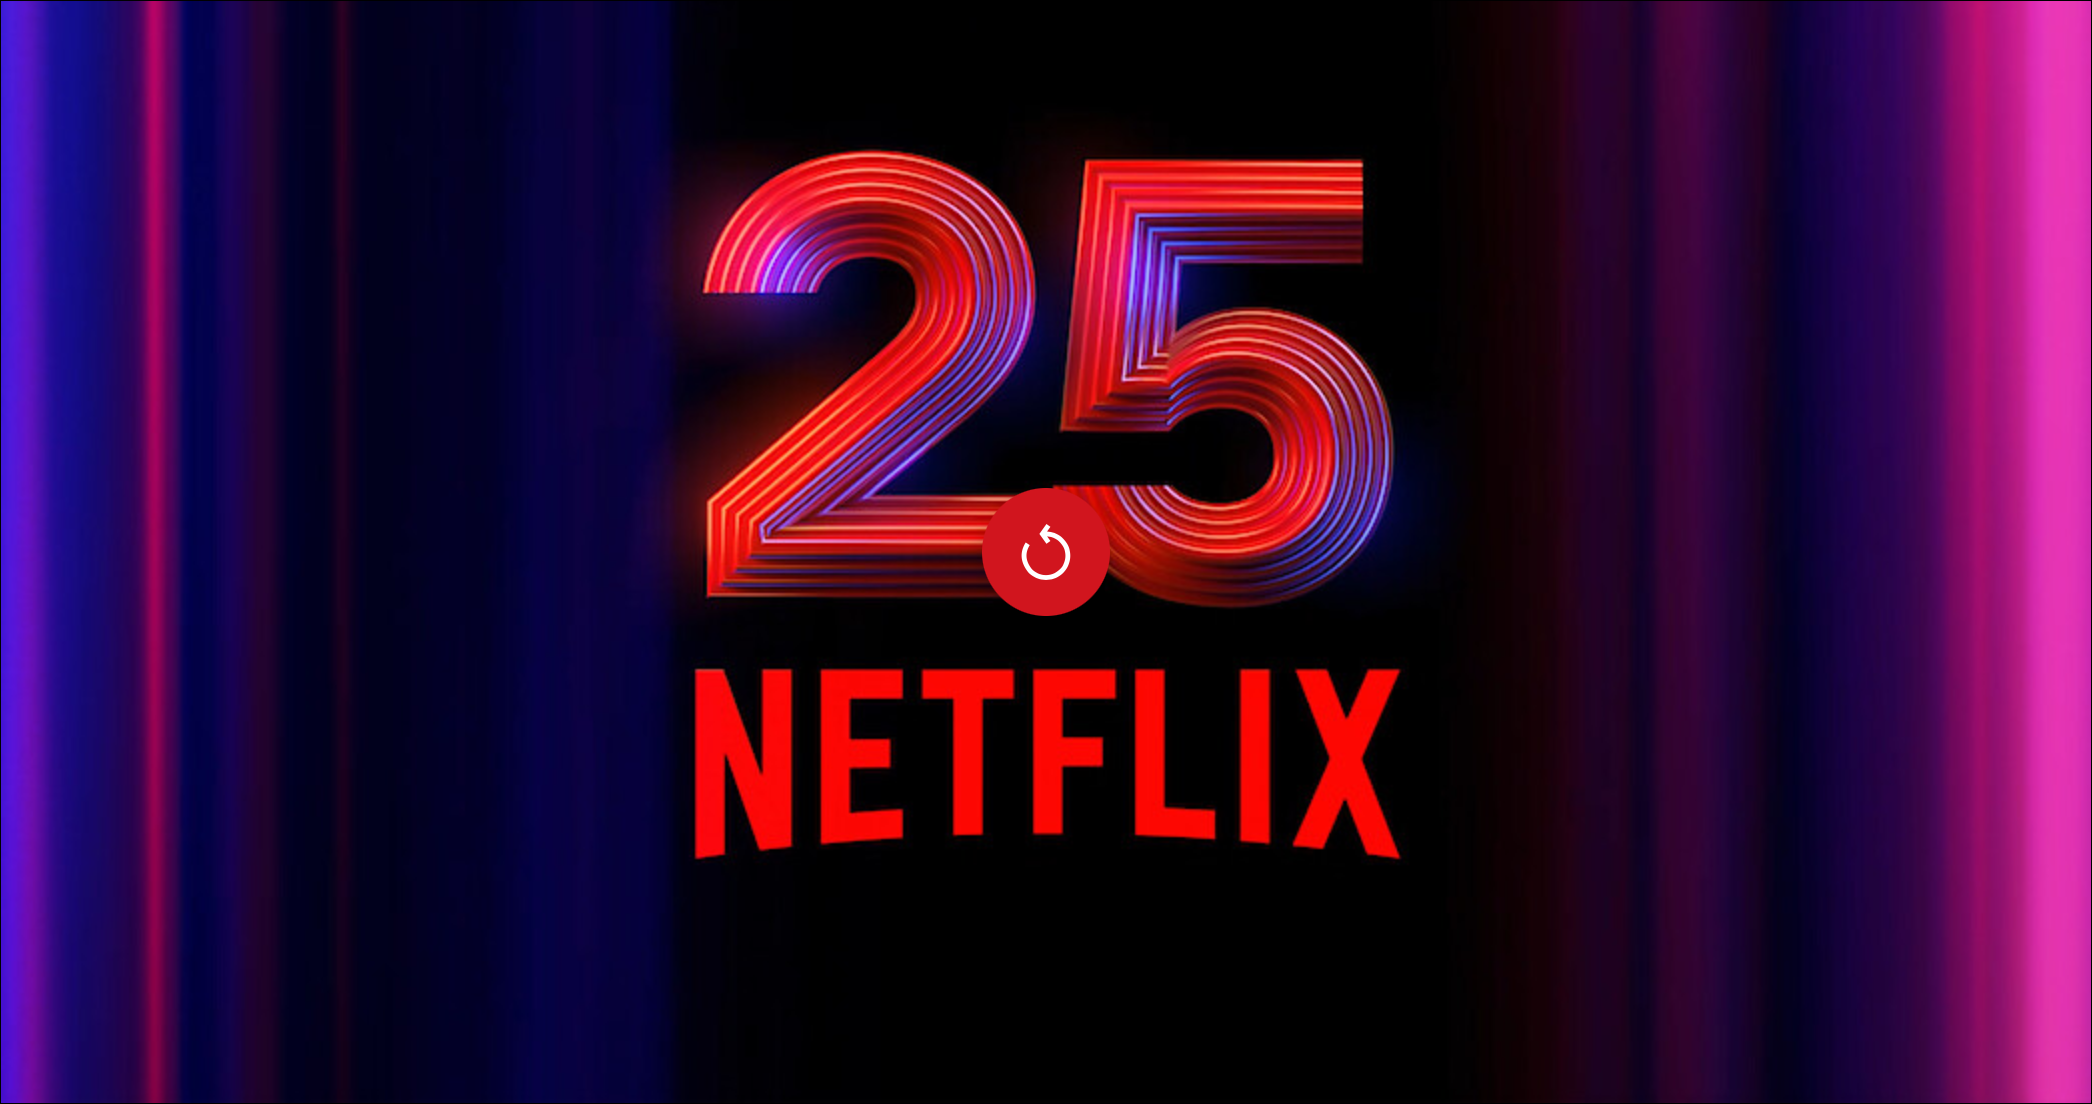 The headline '25 Netflix' on a dark background with vertical rainbow accents